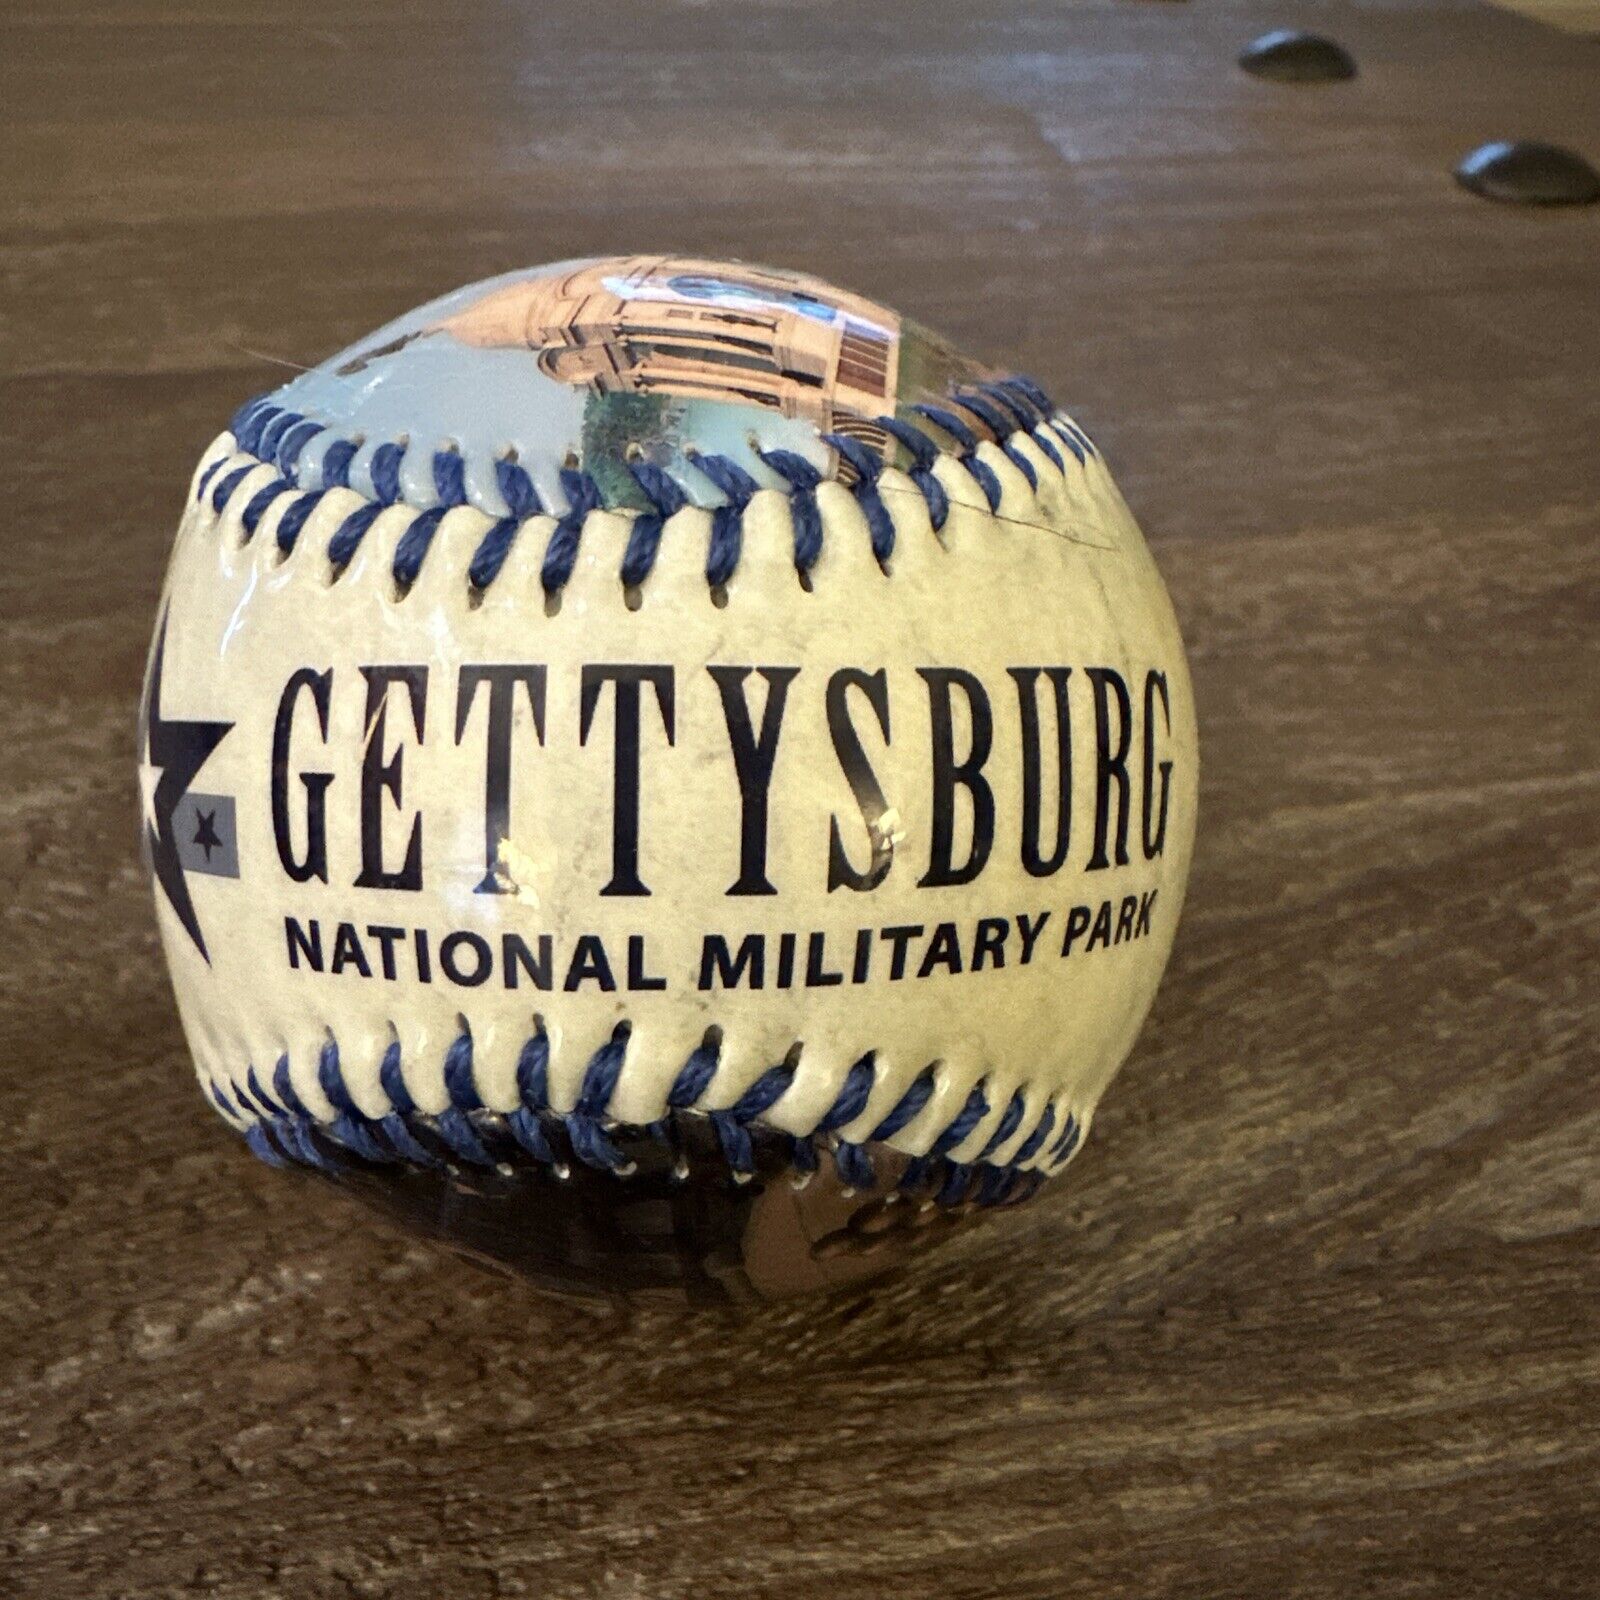 Gettysburg National Military Park Commemorative Baseball